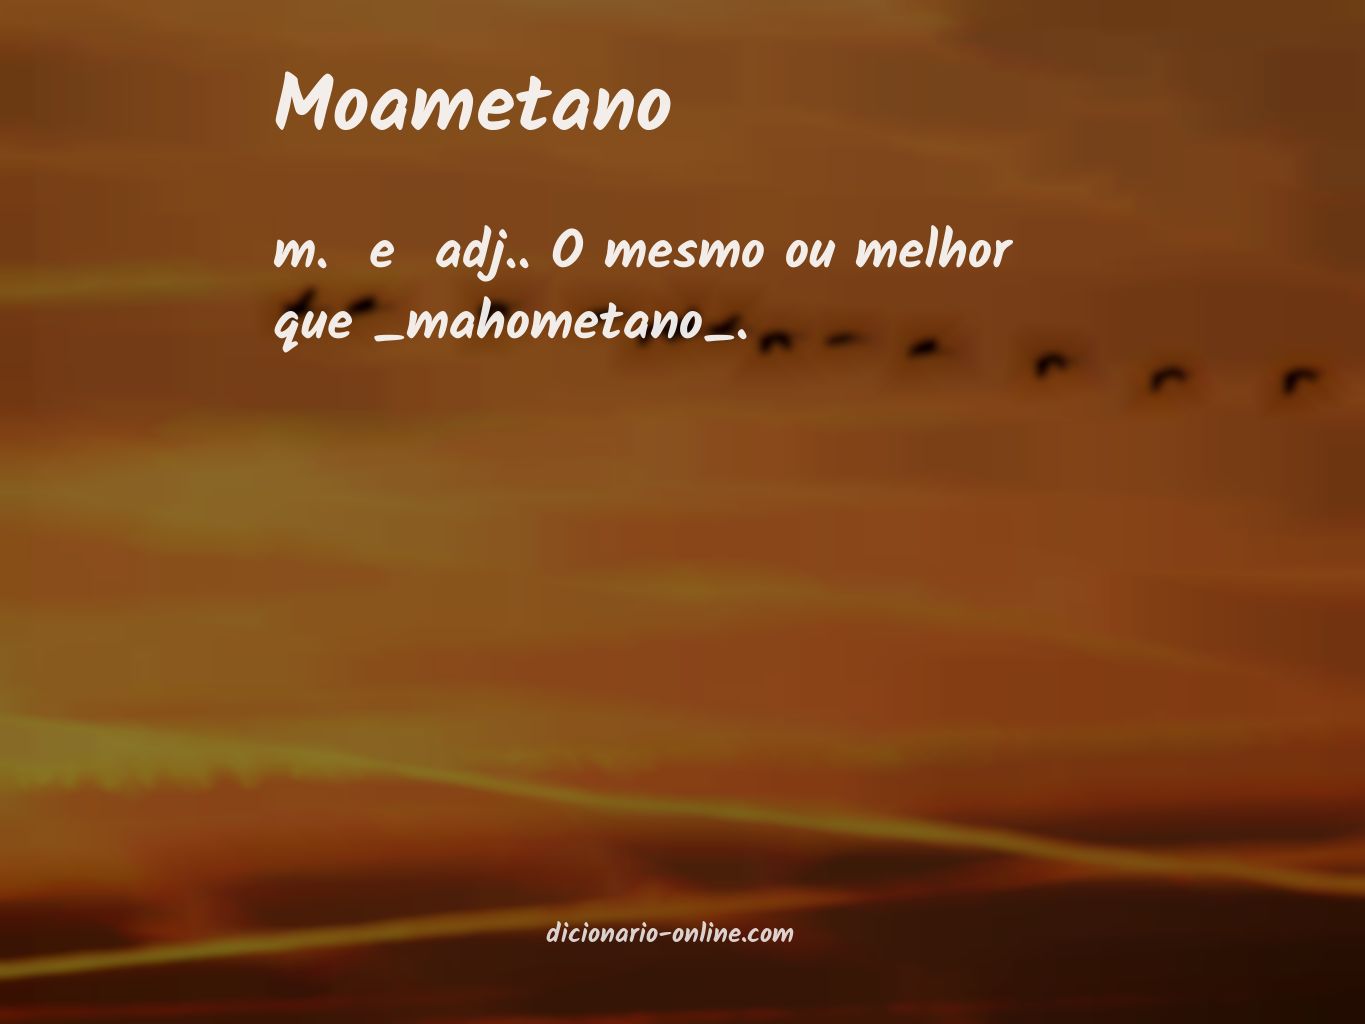 Significado de moametano